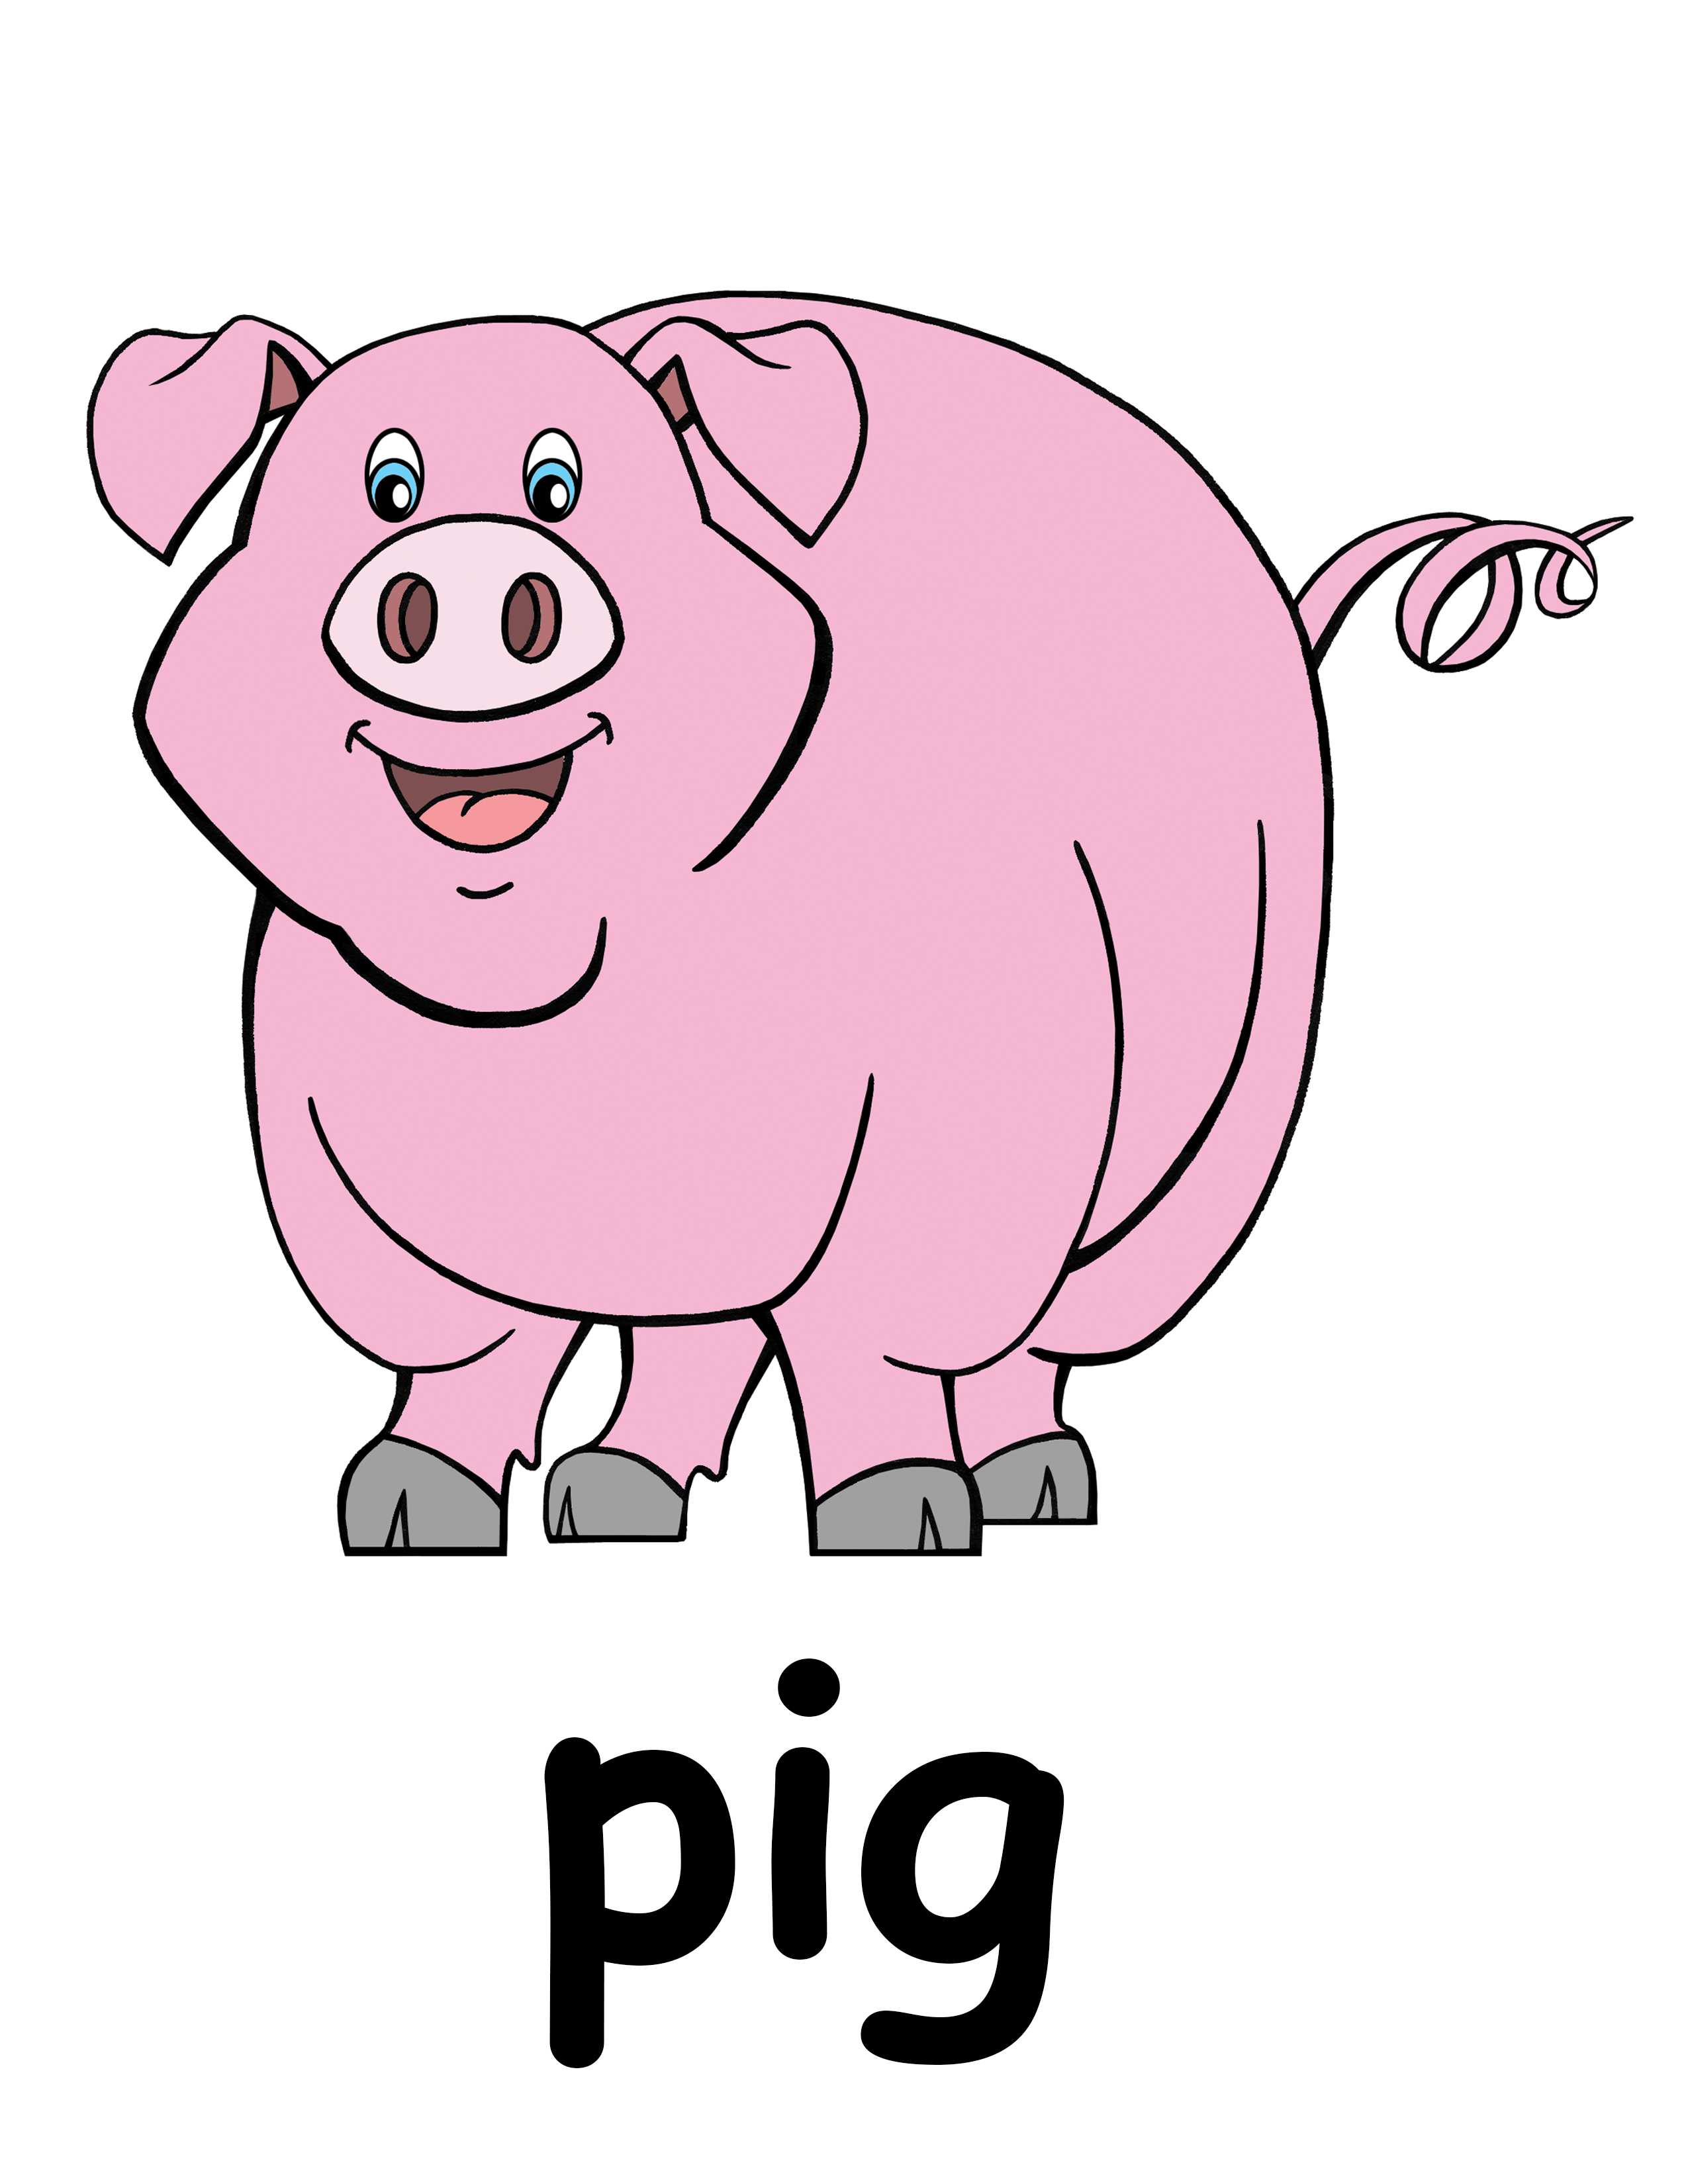 Pig in mud cartoon farm clipart free clip art image image